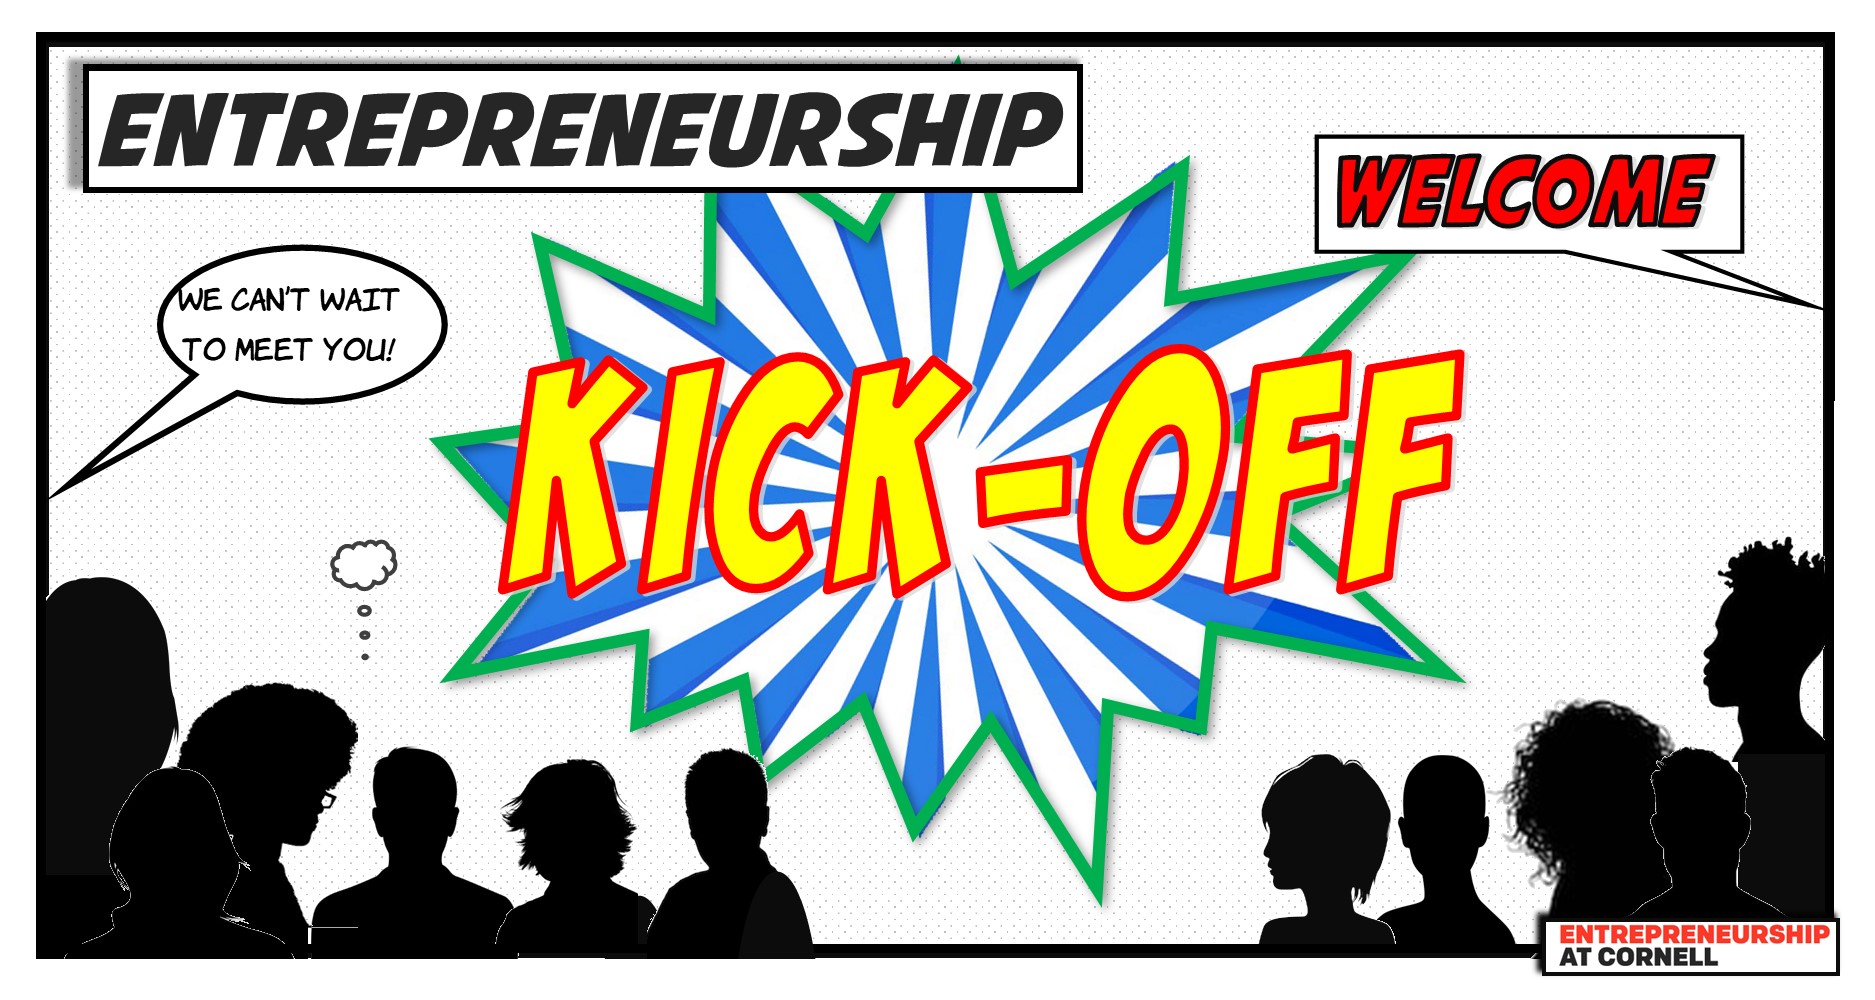 Entrepreneurship Kick-off welcome graphic